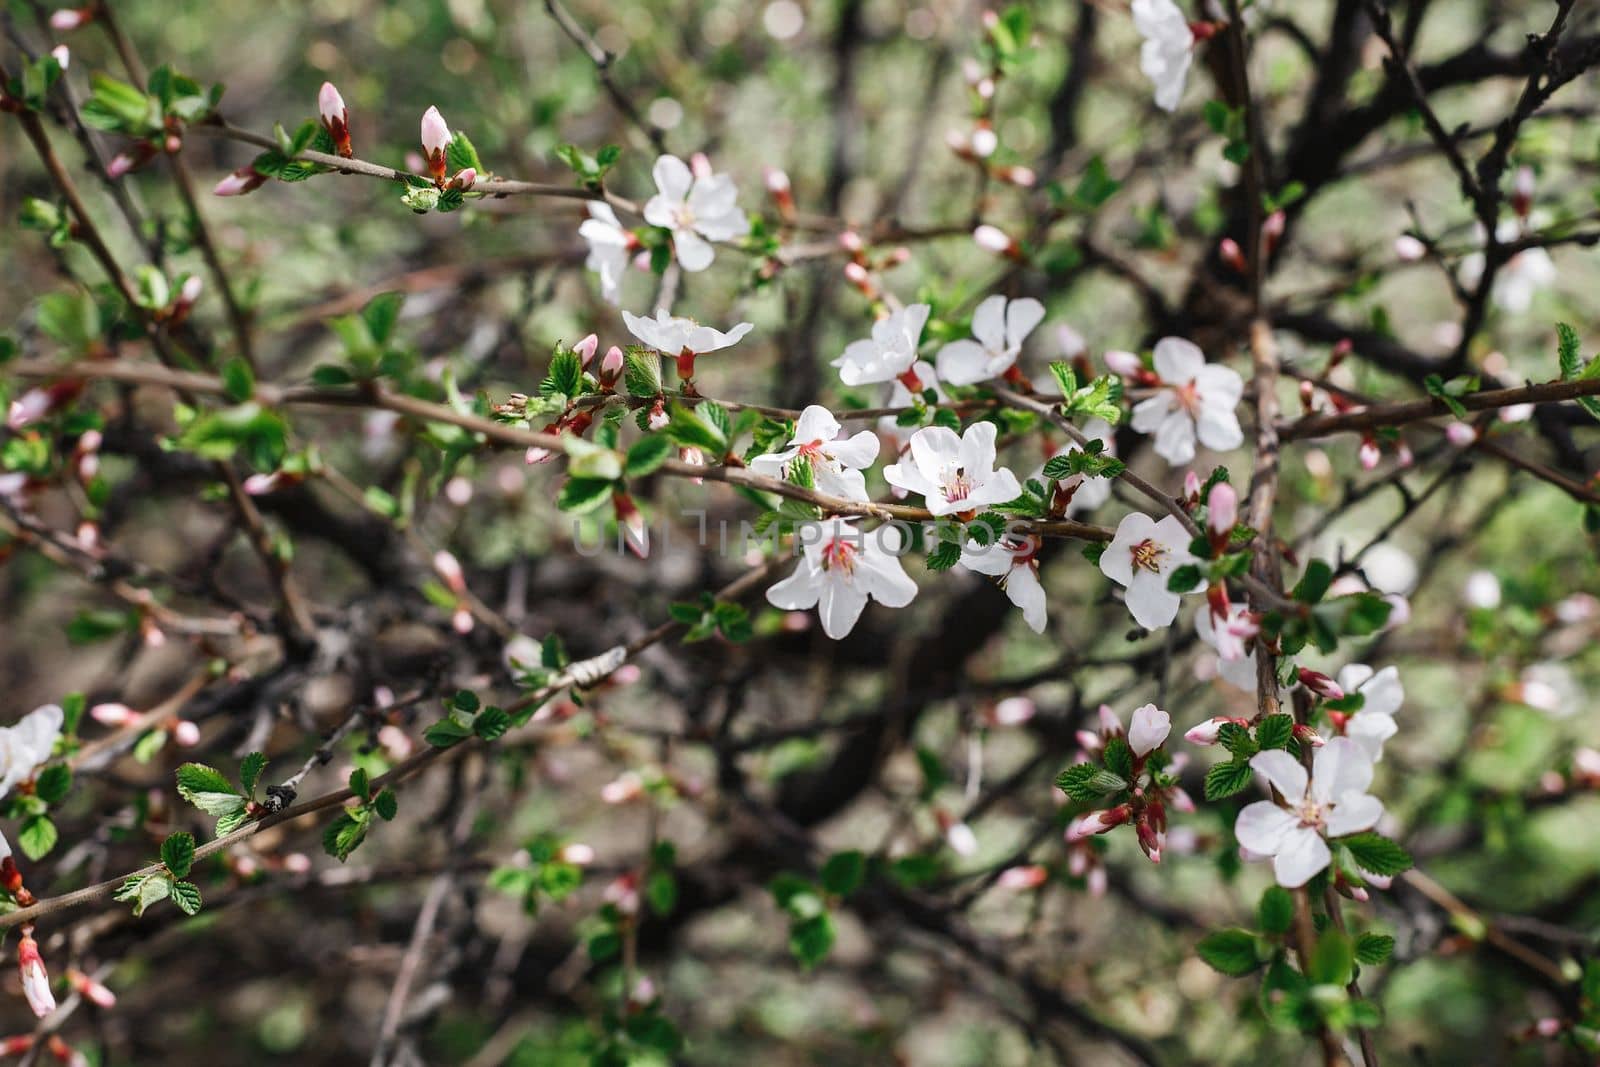 Cherry blossom branch in an urban garden in early spring by Alekstark